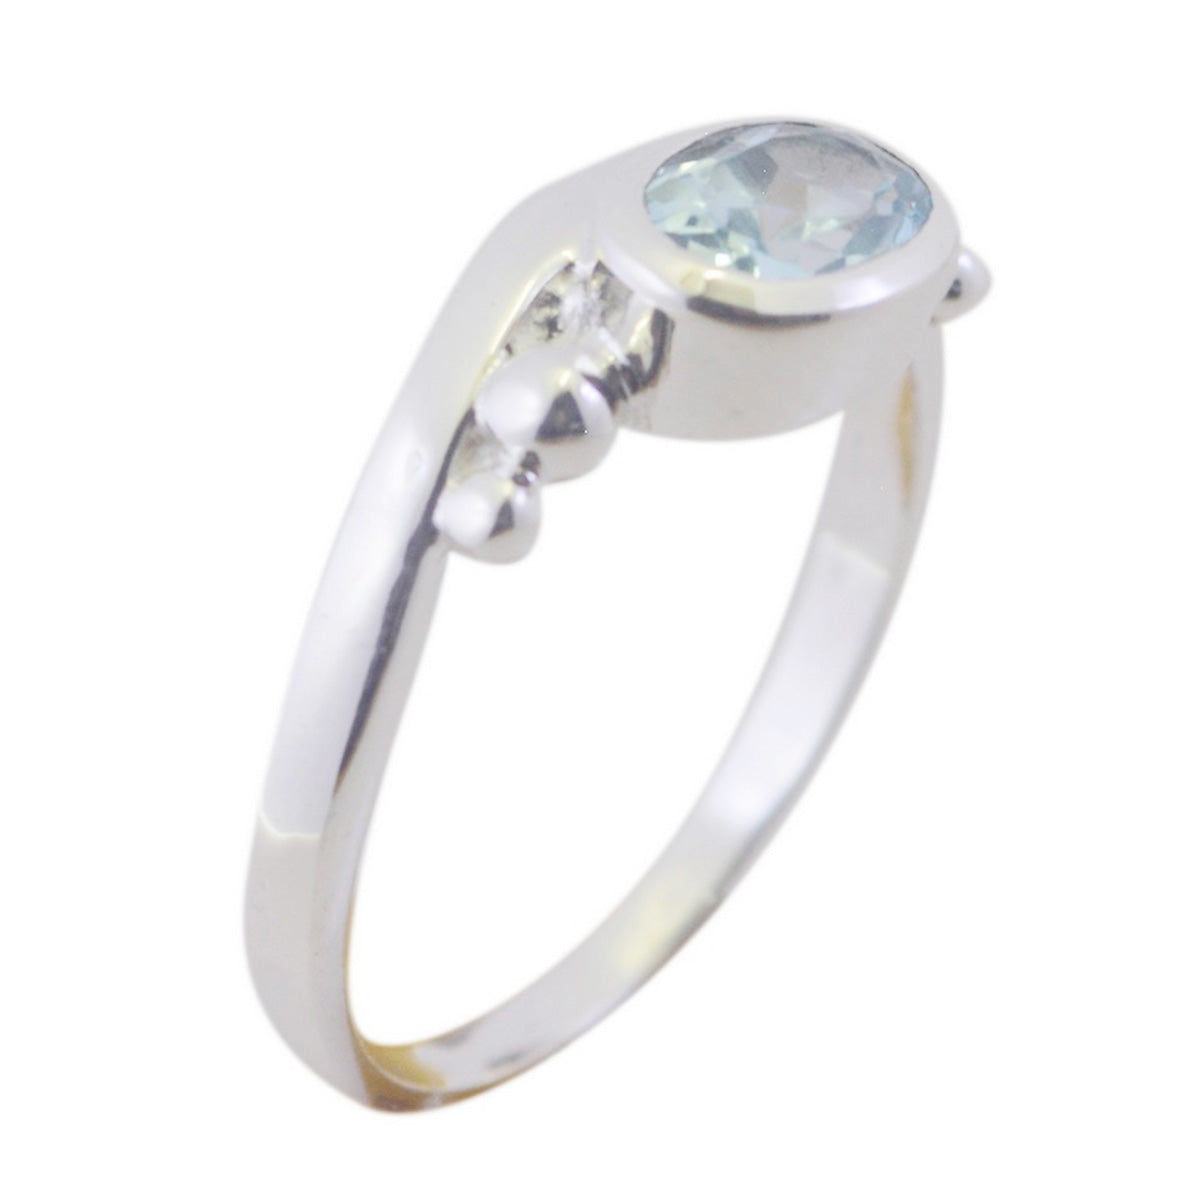 Riyo Captivating Gemstone Blue Topaz Solid Silver Ring Jewelry Logos